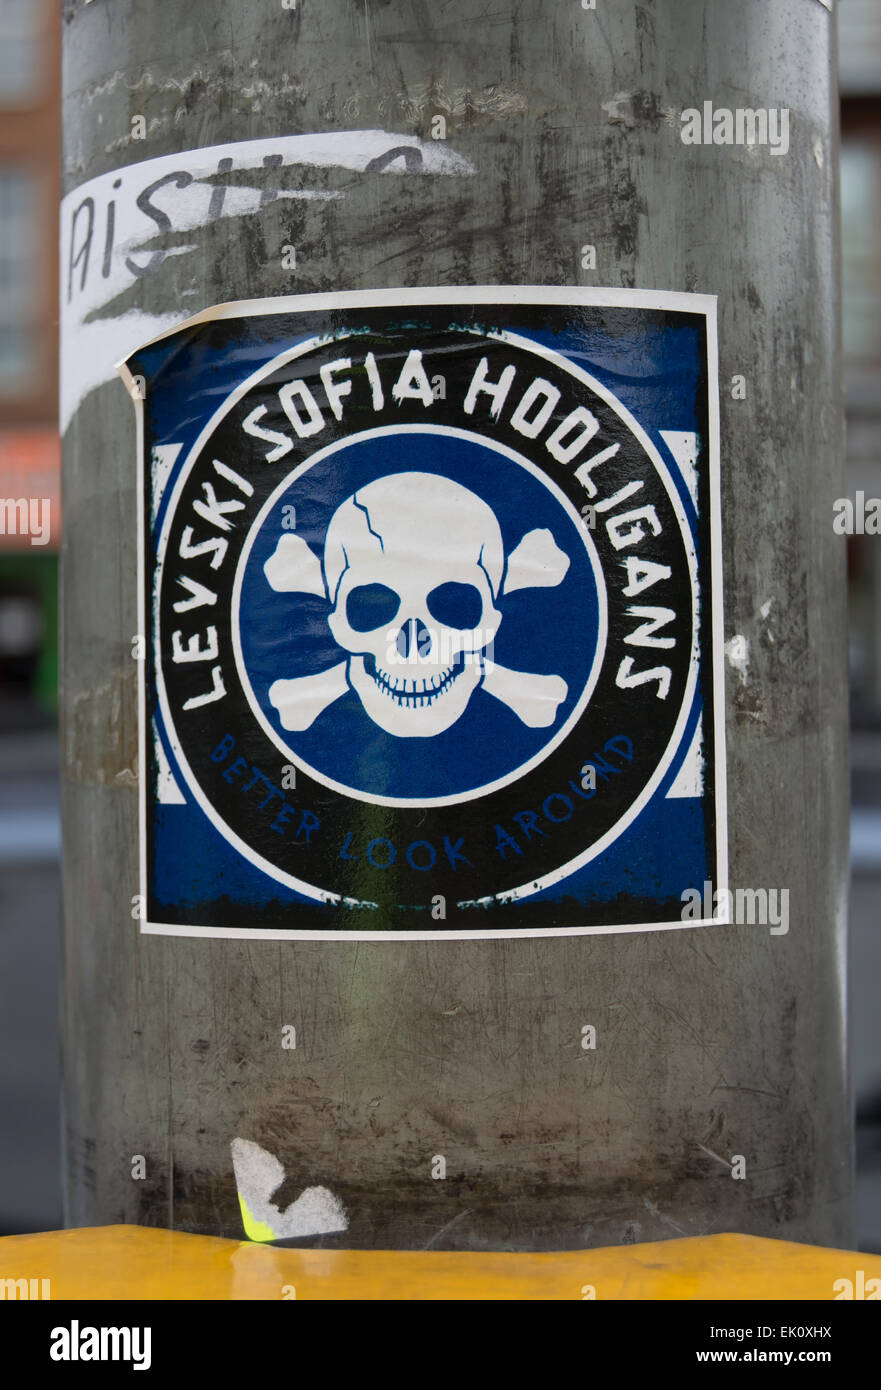 sticker denoting levski sofia hooligans, trouble seeking followers of the bulgarian football team levski sofia Stock Photo